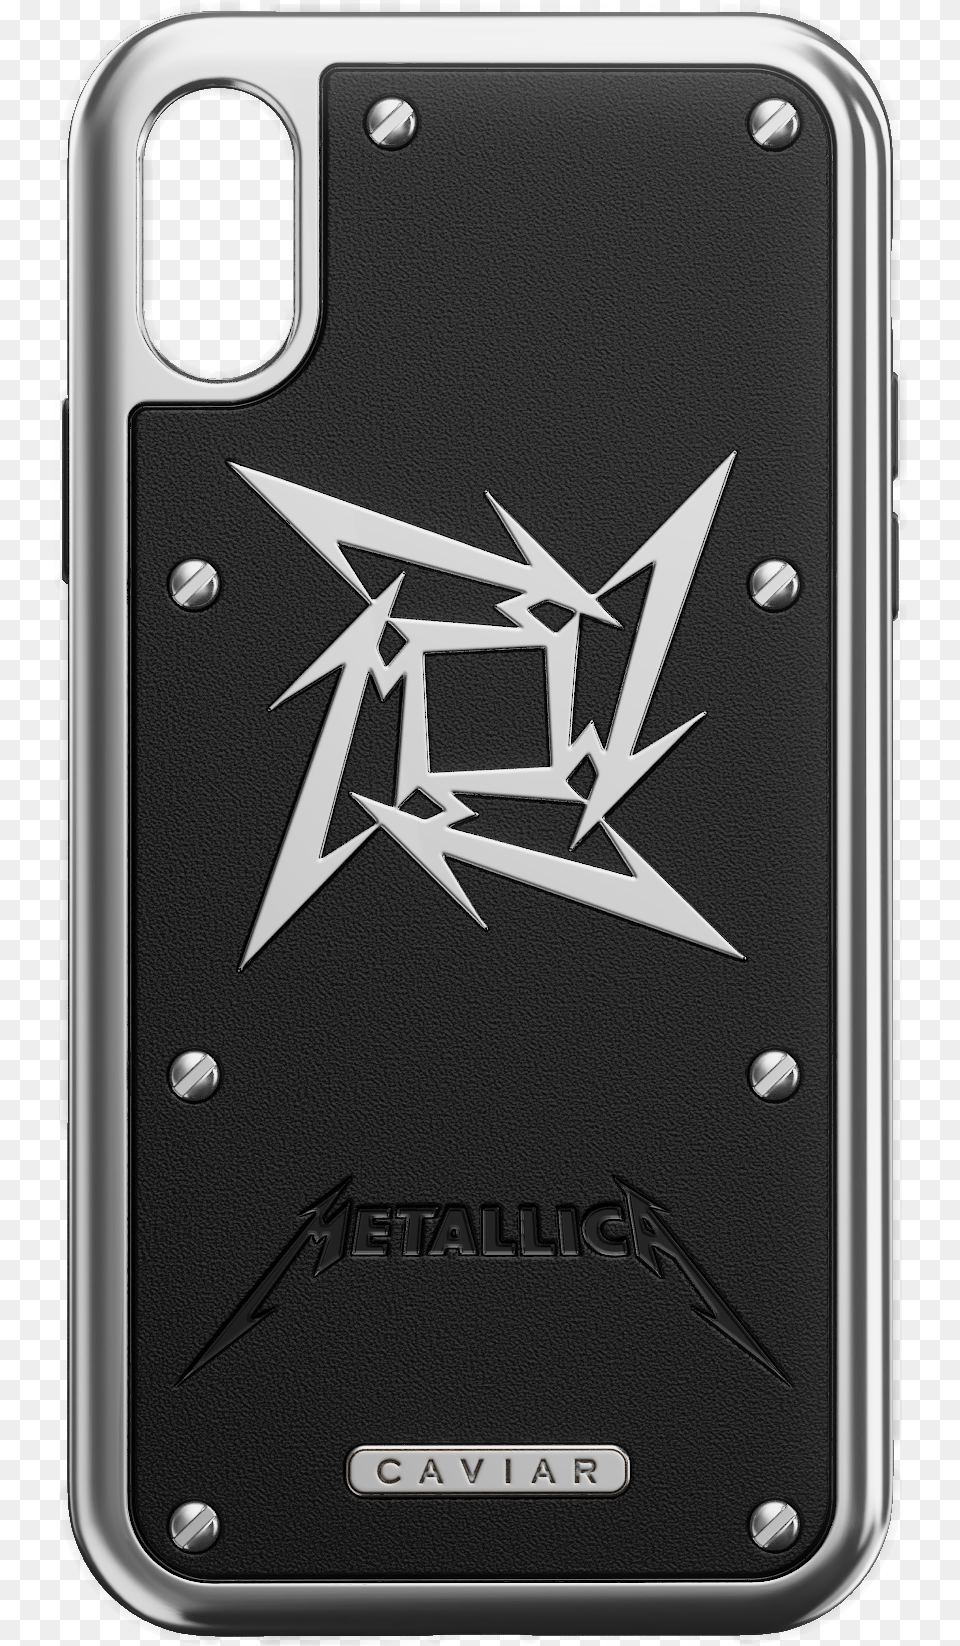 Buy Metallica Iphone X Cover Caviar Iphone Case, Electronics, Mobile Phone, Phone, Logo Png